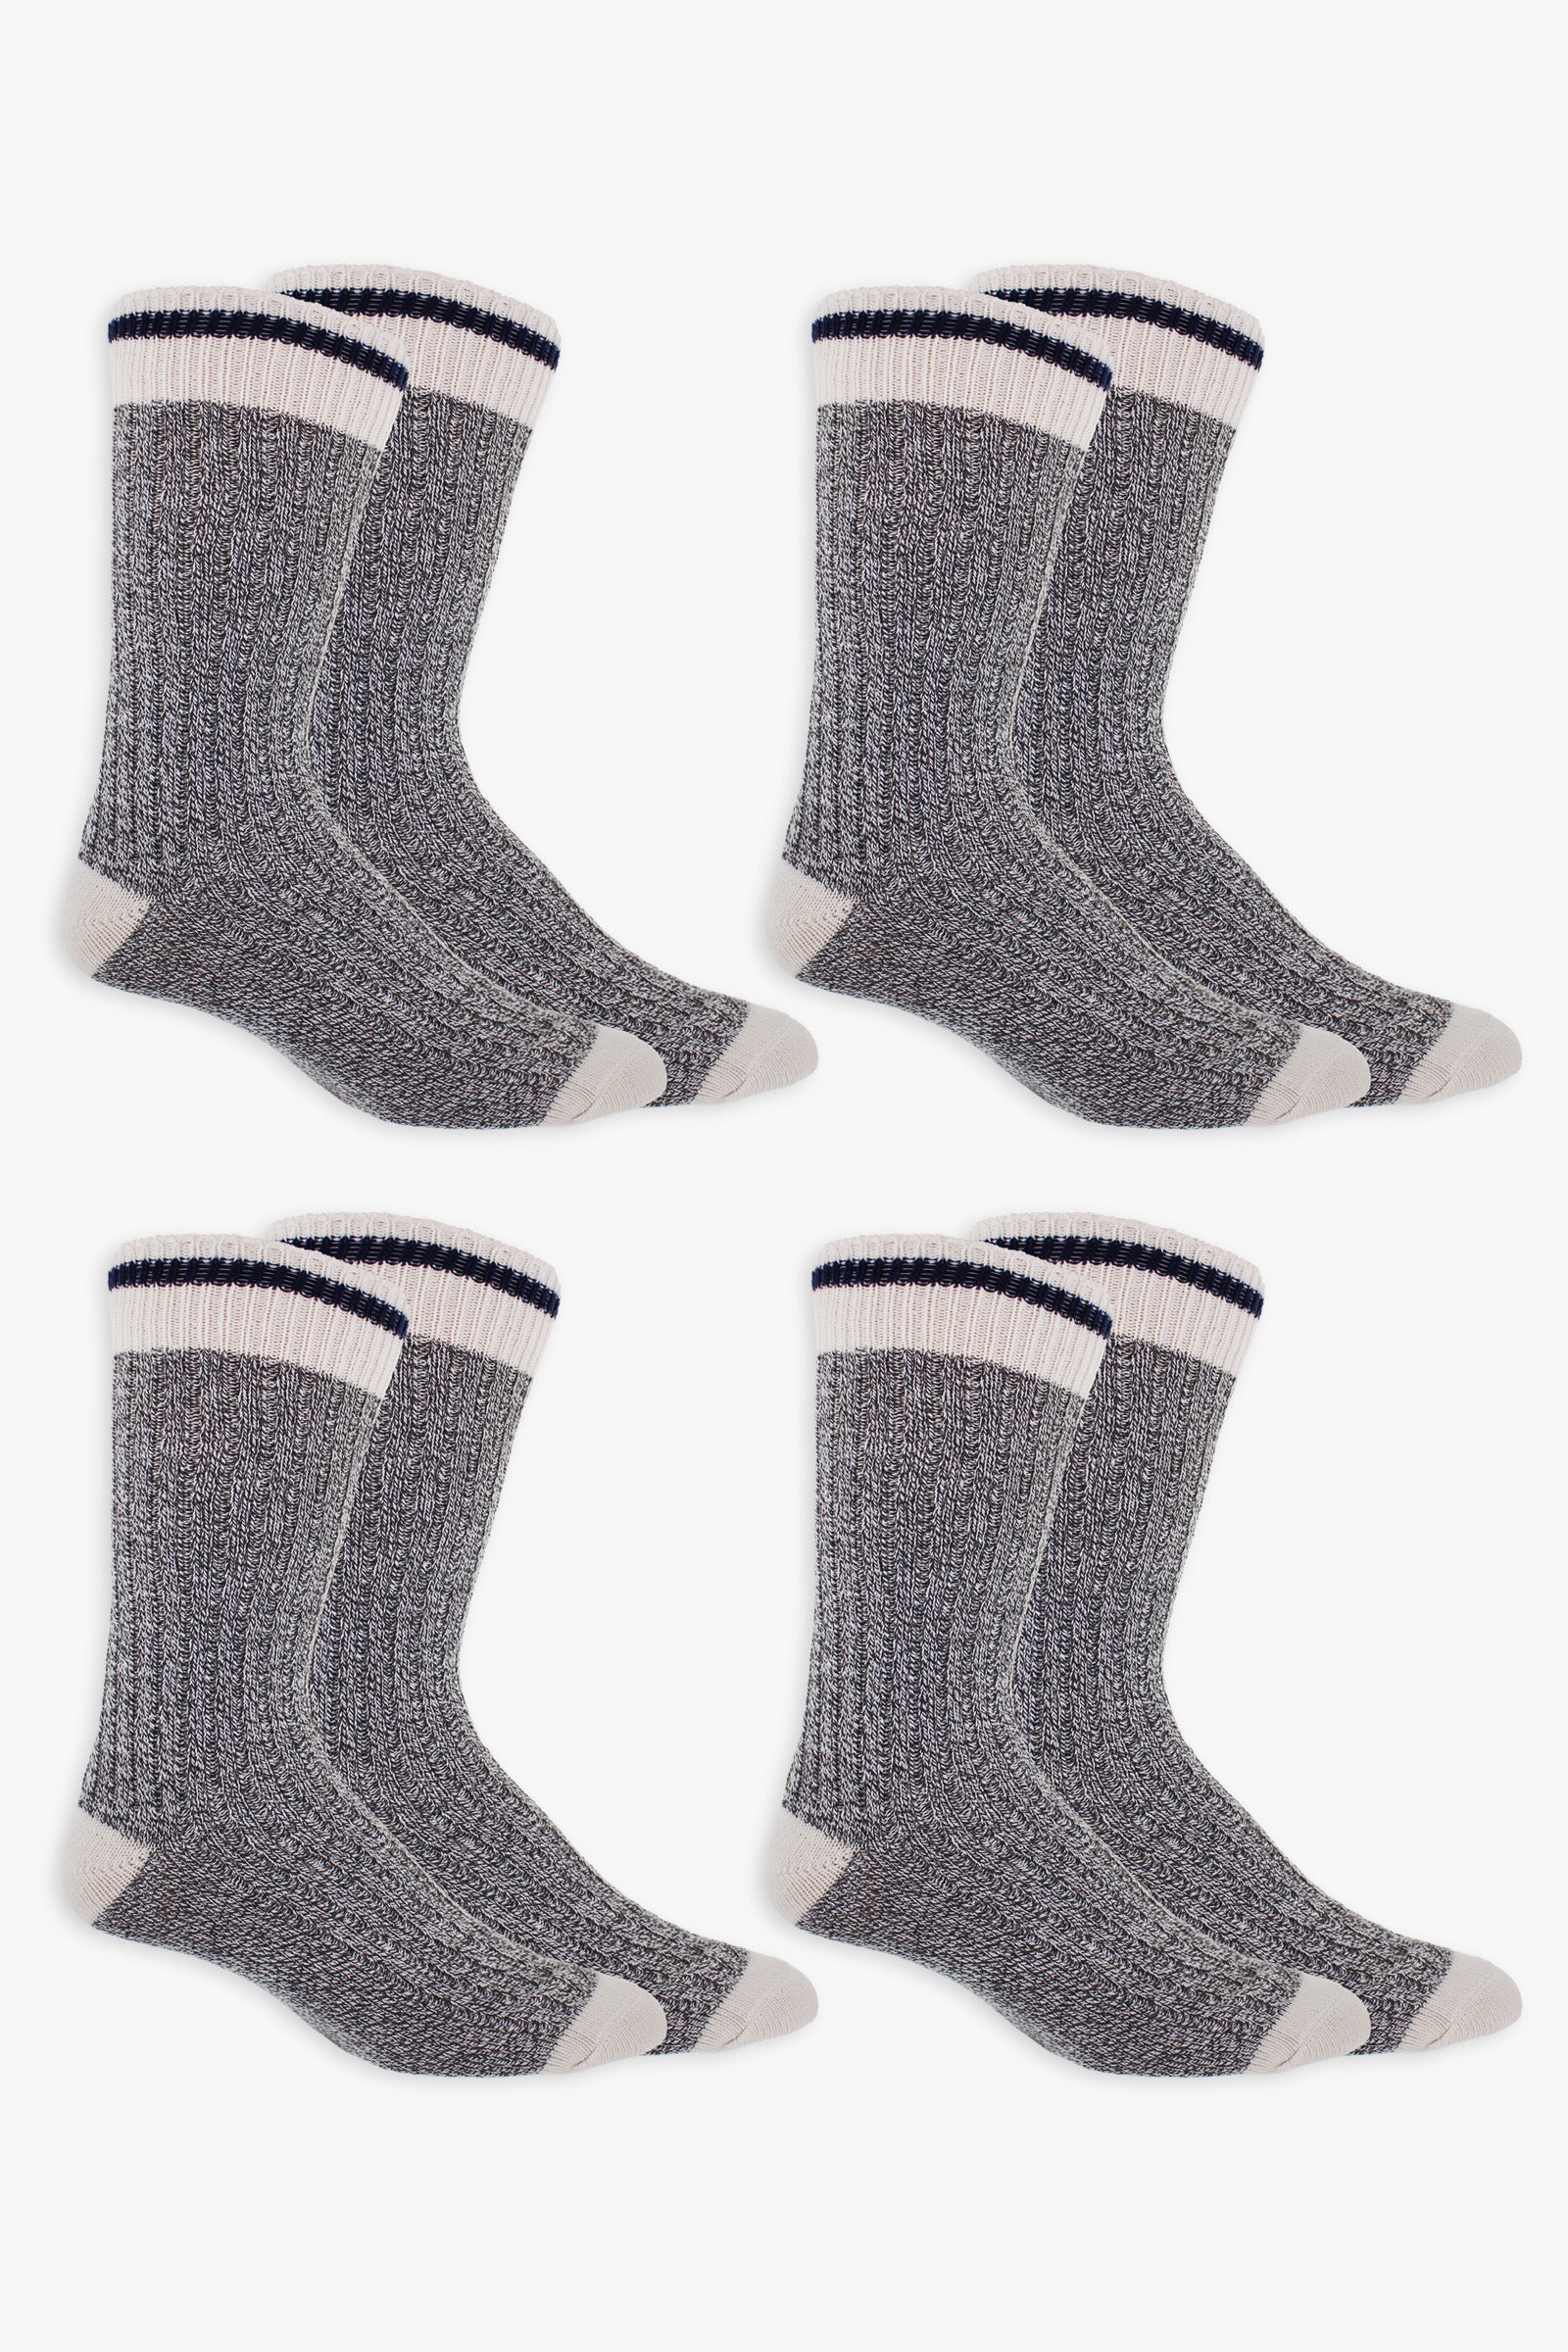 Great Northern Men's Grey & Navy Winter Boot Socks